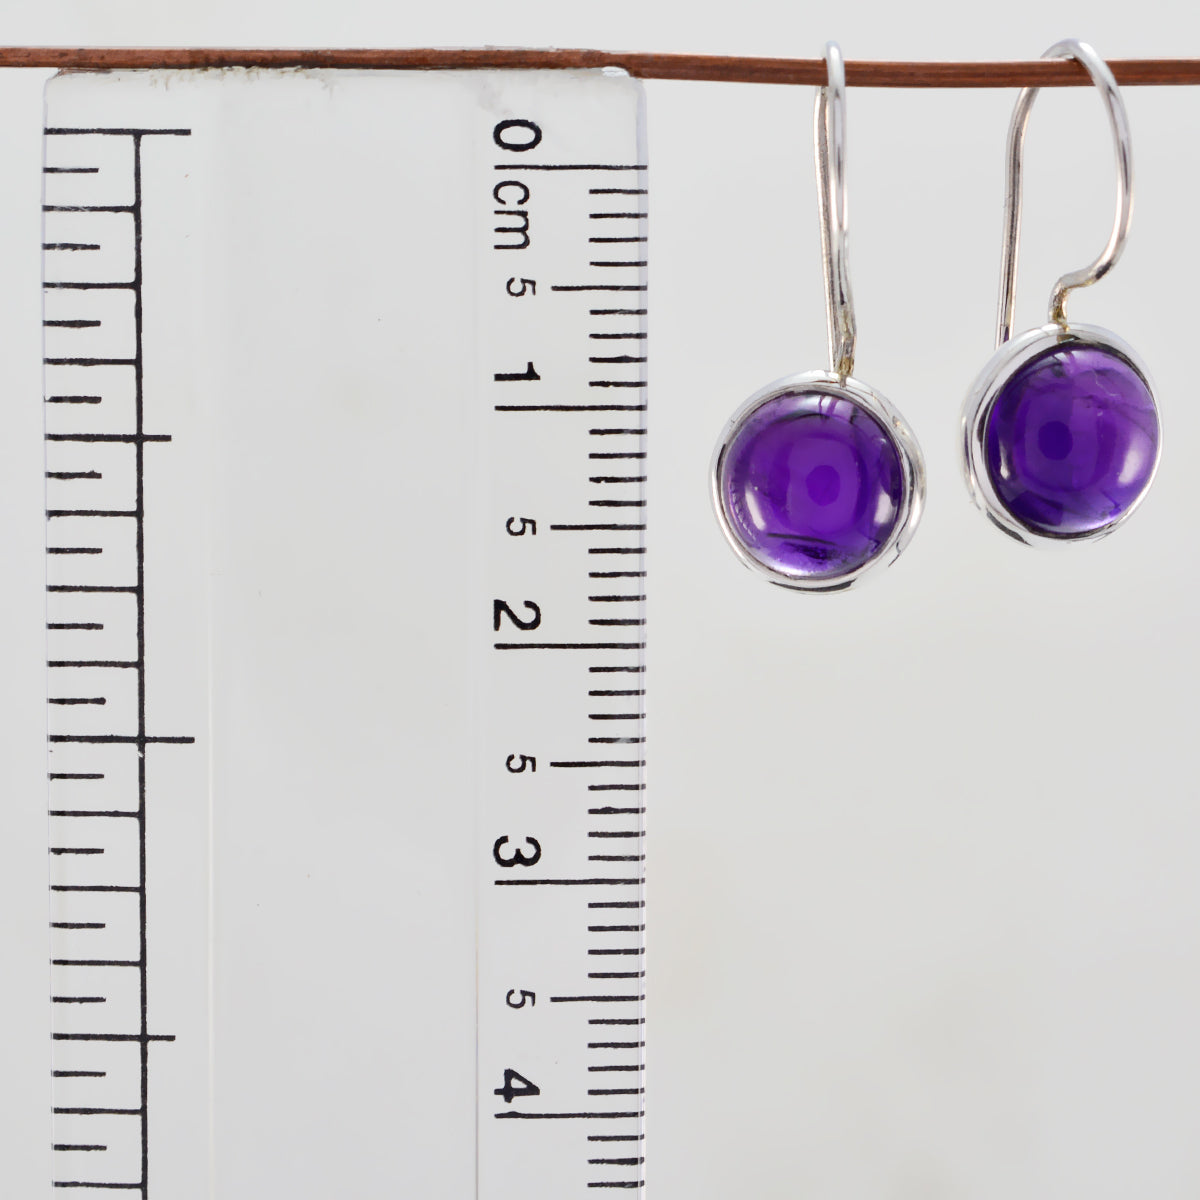 Riyo Real Gemstones round Cabochon Purple Amethyst Silver Earrings gift for graduation